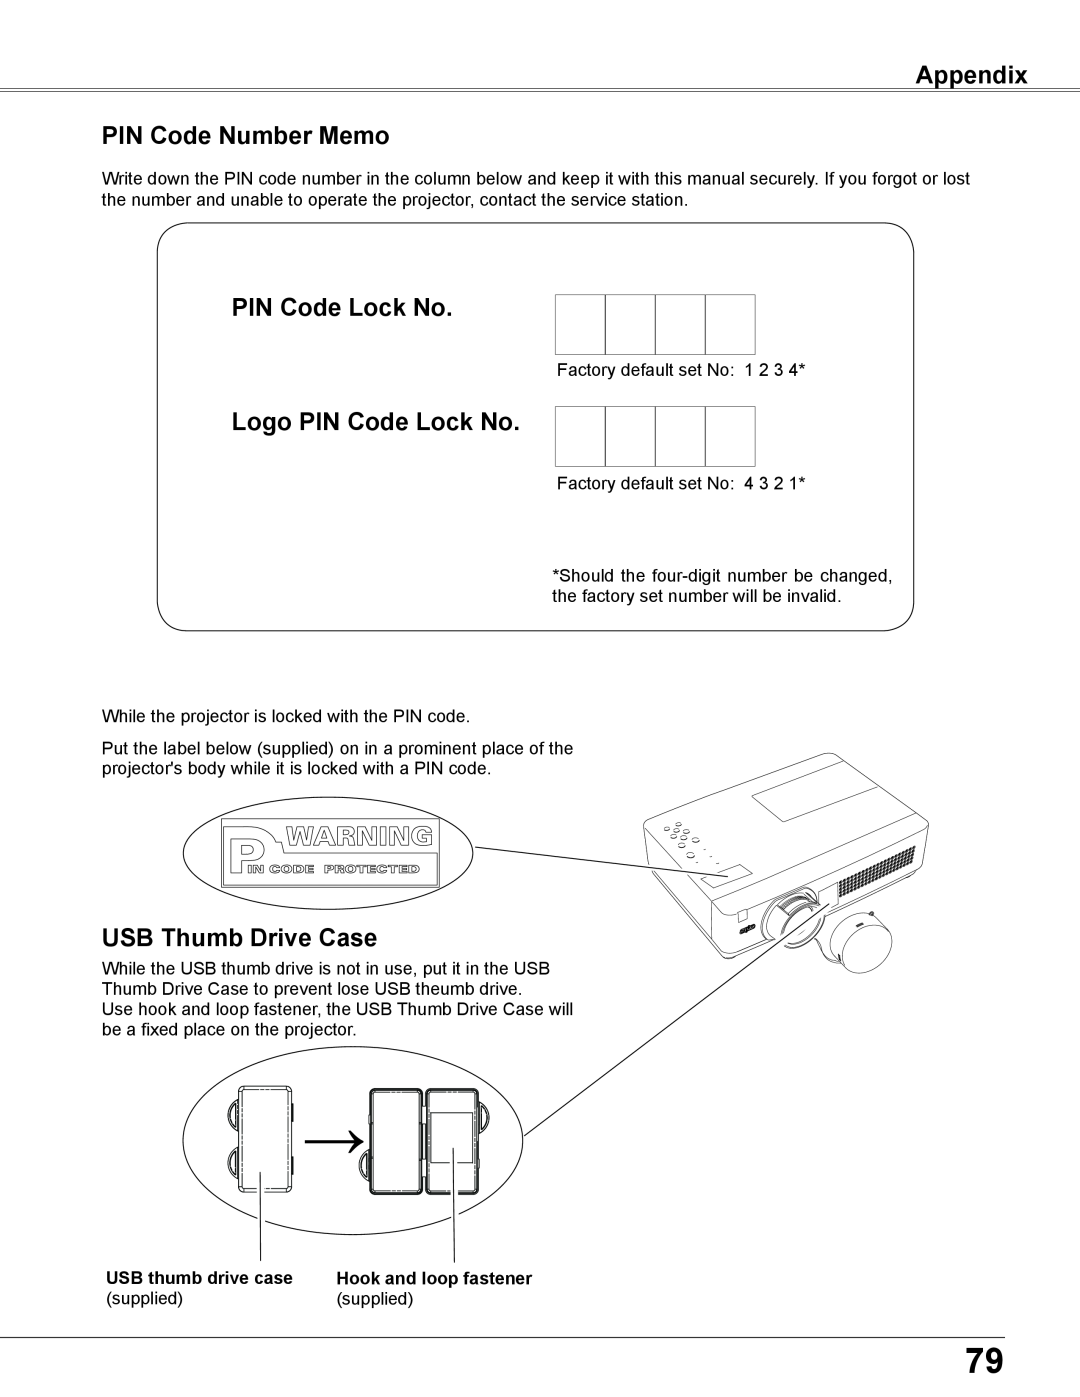 Sanyo PLC-XU305A Appendix PIN Code Number Memo, Logo PIN Code Lock No, USB Thumb Drive Case, USB thumb drive case 